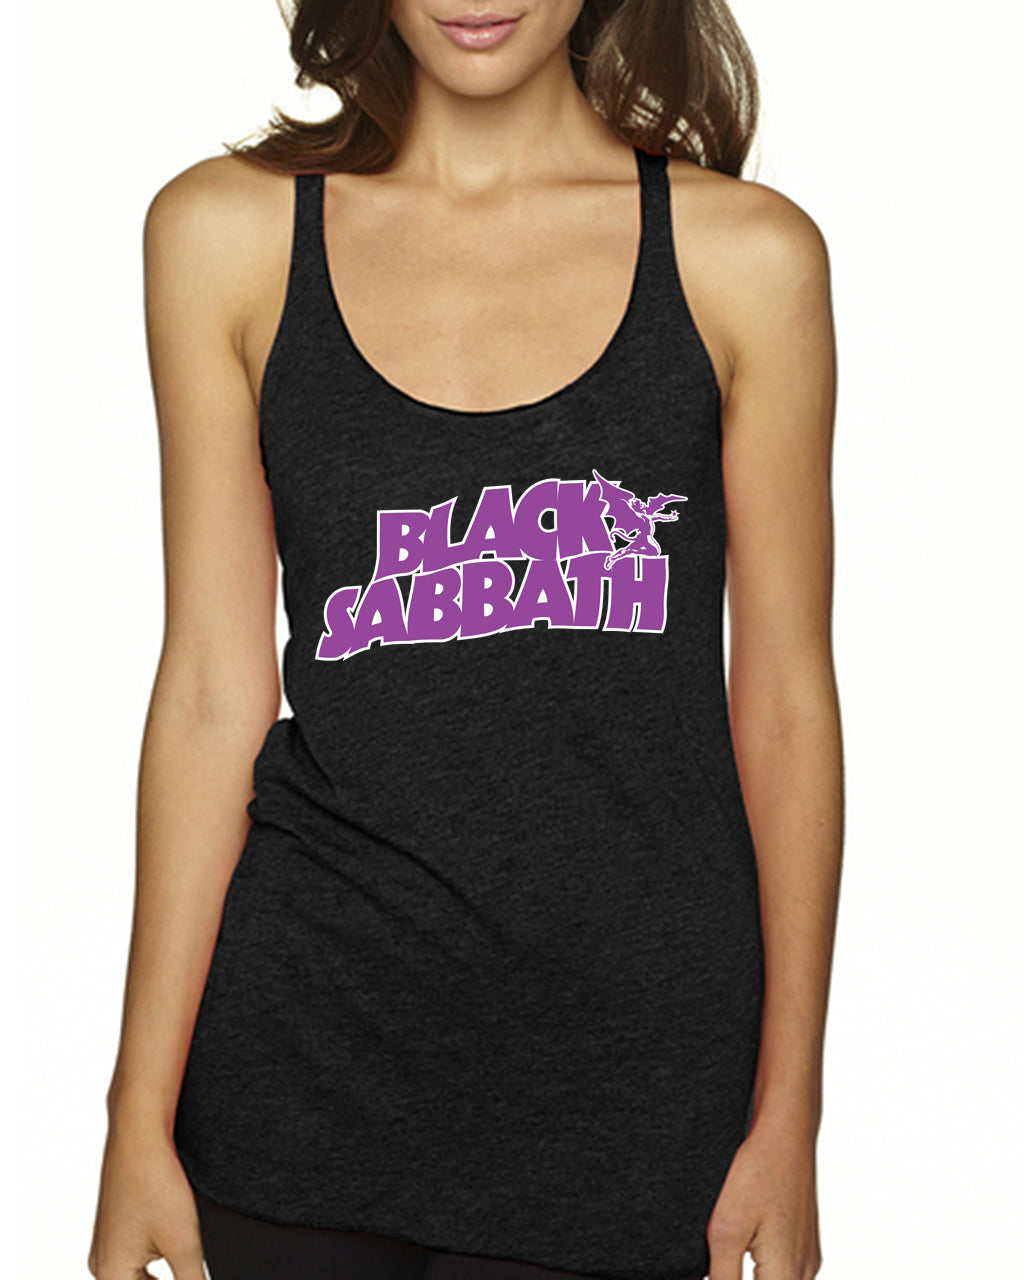 Black Sabbath Inspired T-Shirt